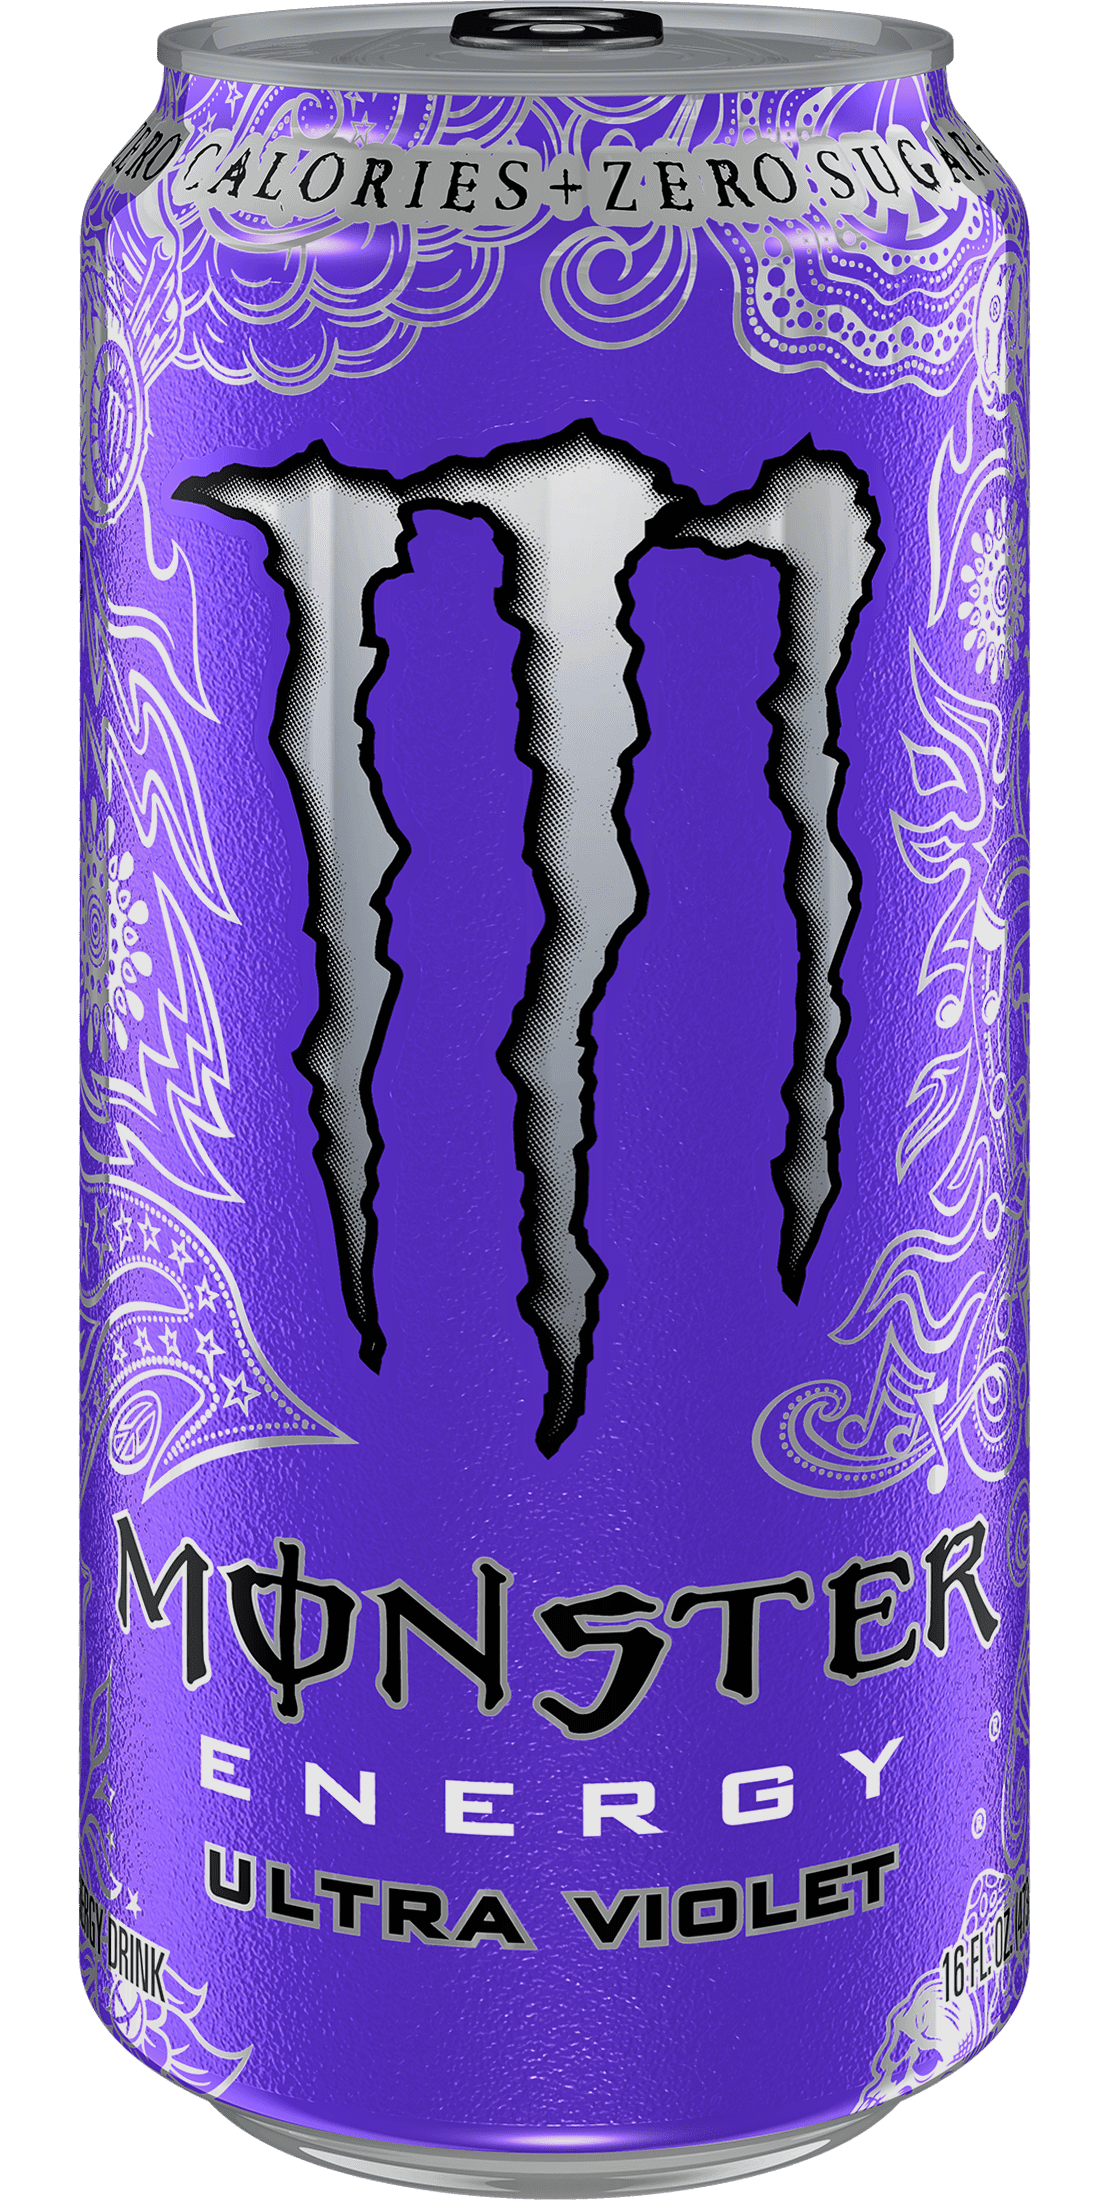 Monster Energy Ultra Violet, 16 fl oz (24 Cans) - Walmart.com - Walmart.com